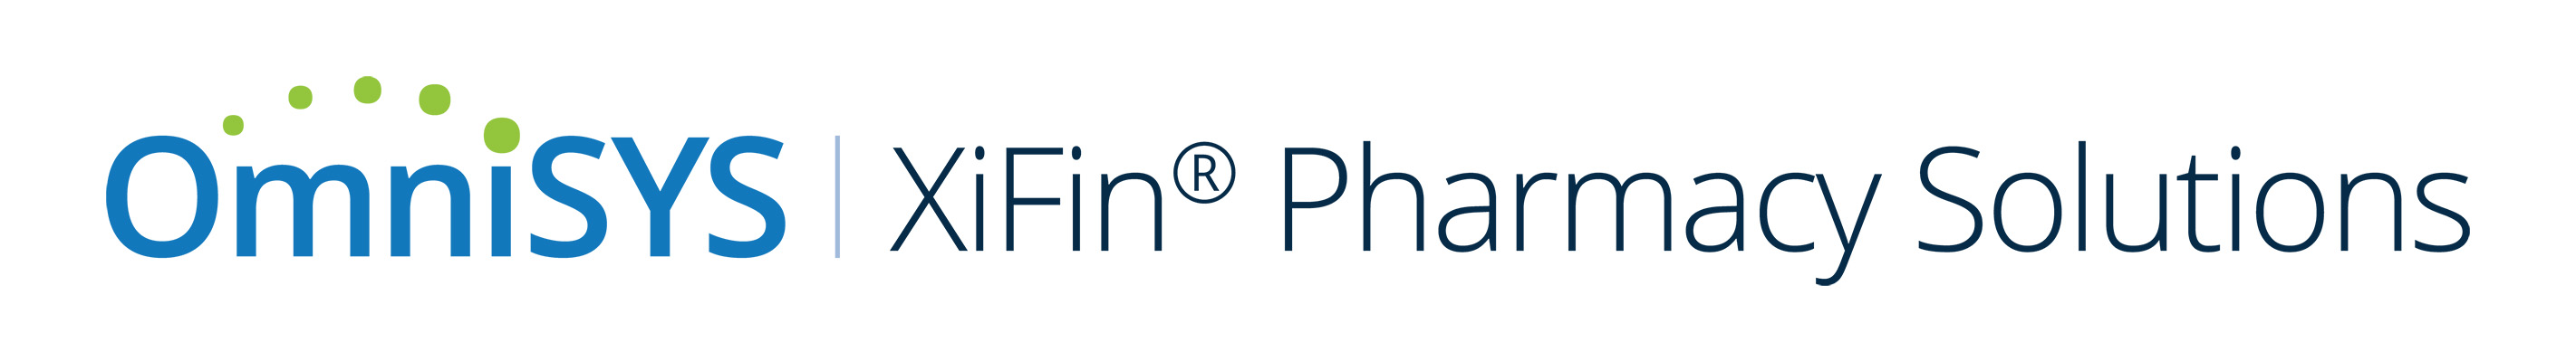 OmniSYS_Pharmacy_Solutions_logo_horizontal_tagline_400pxH